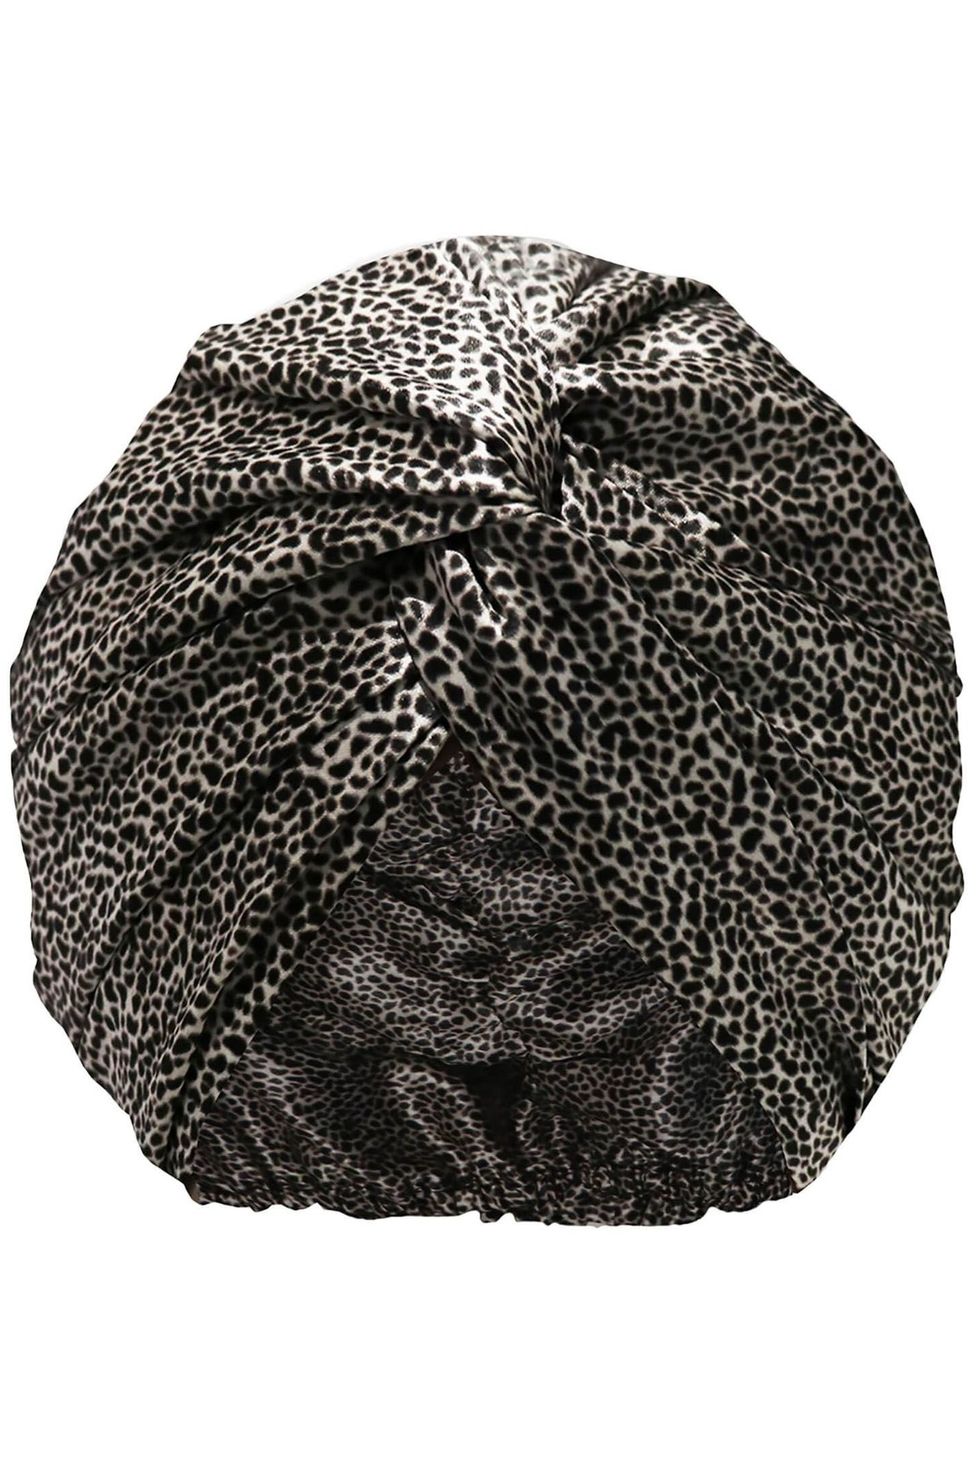 Pure Silk Turban